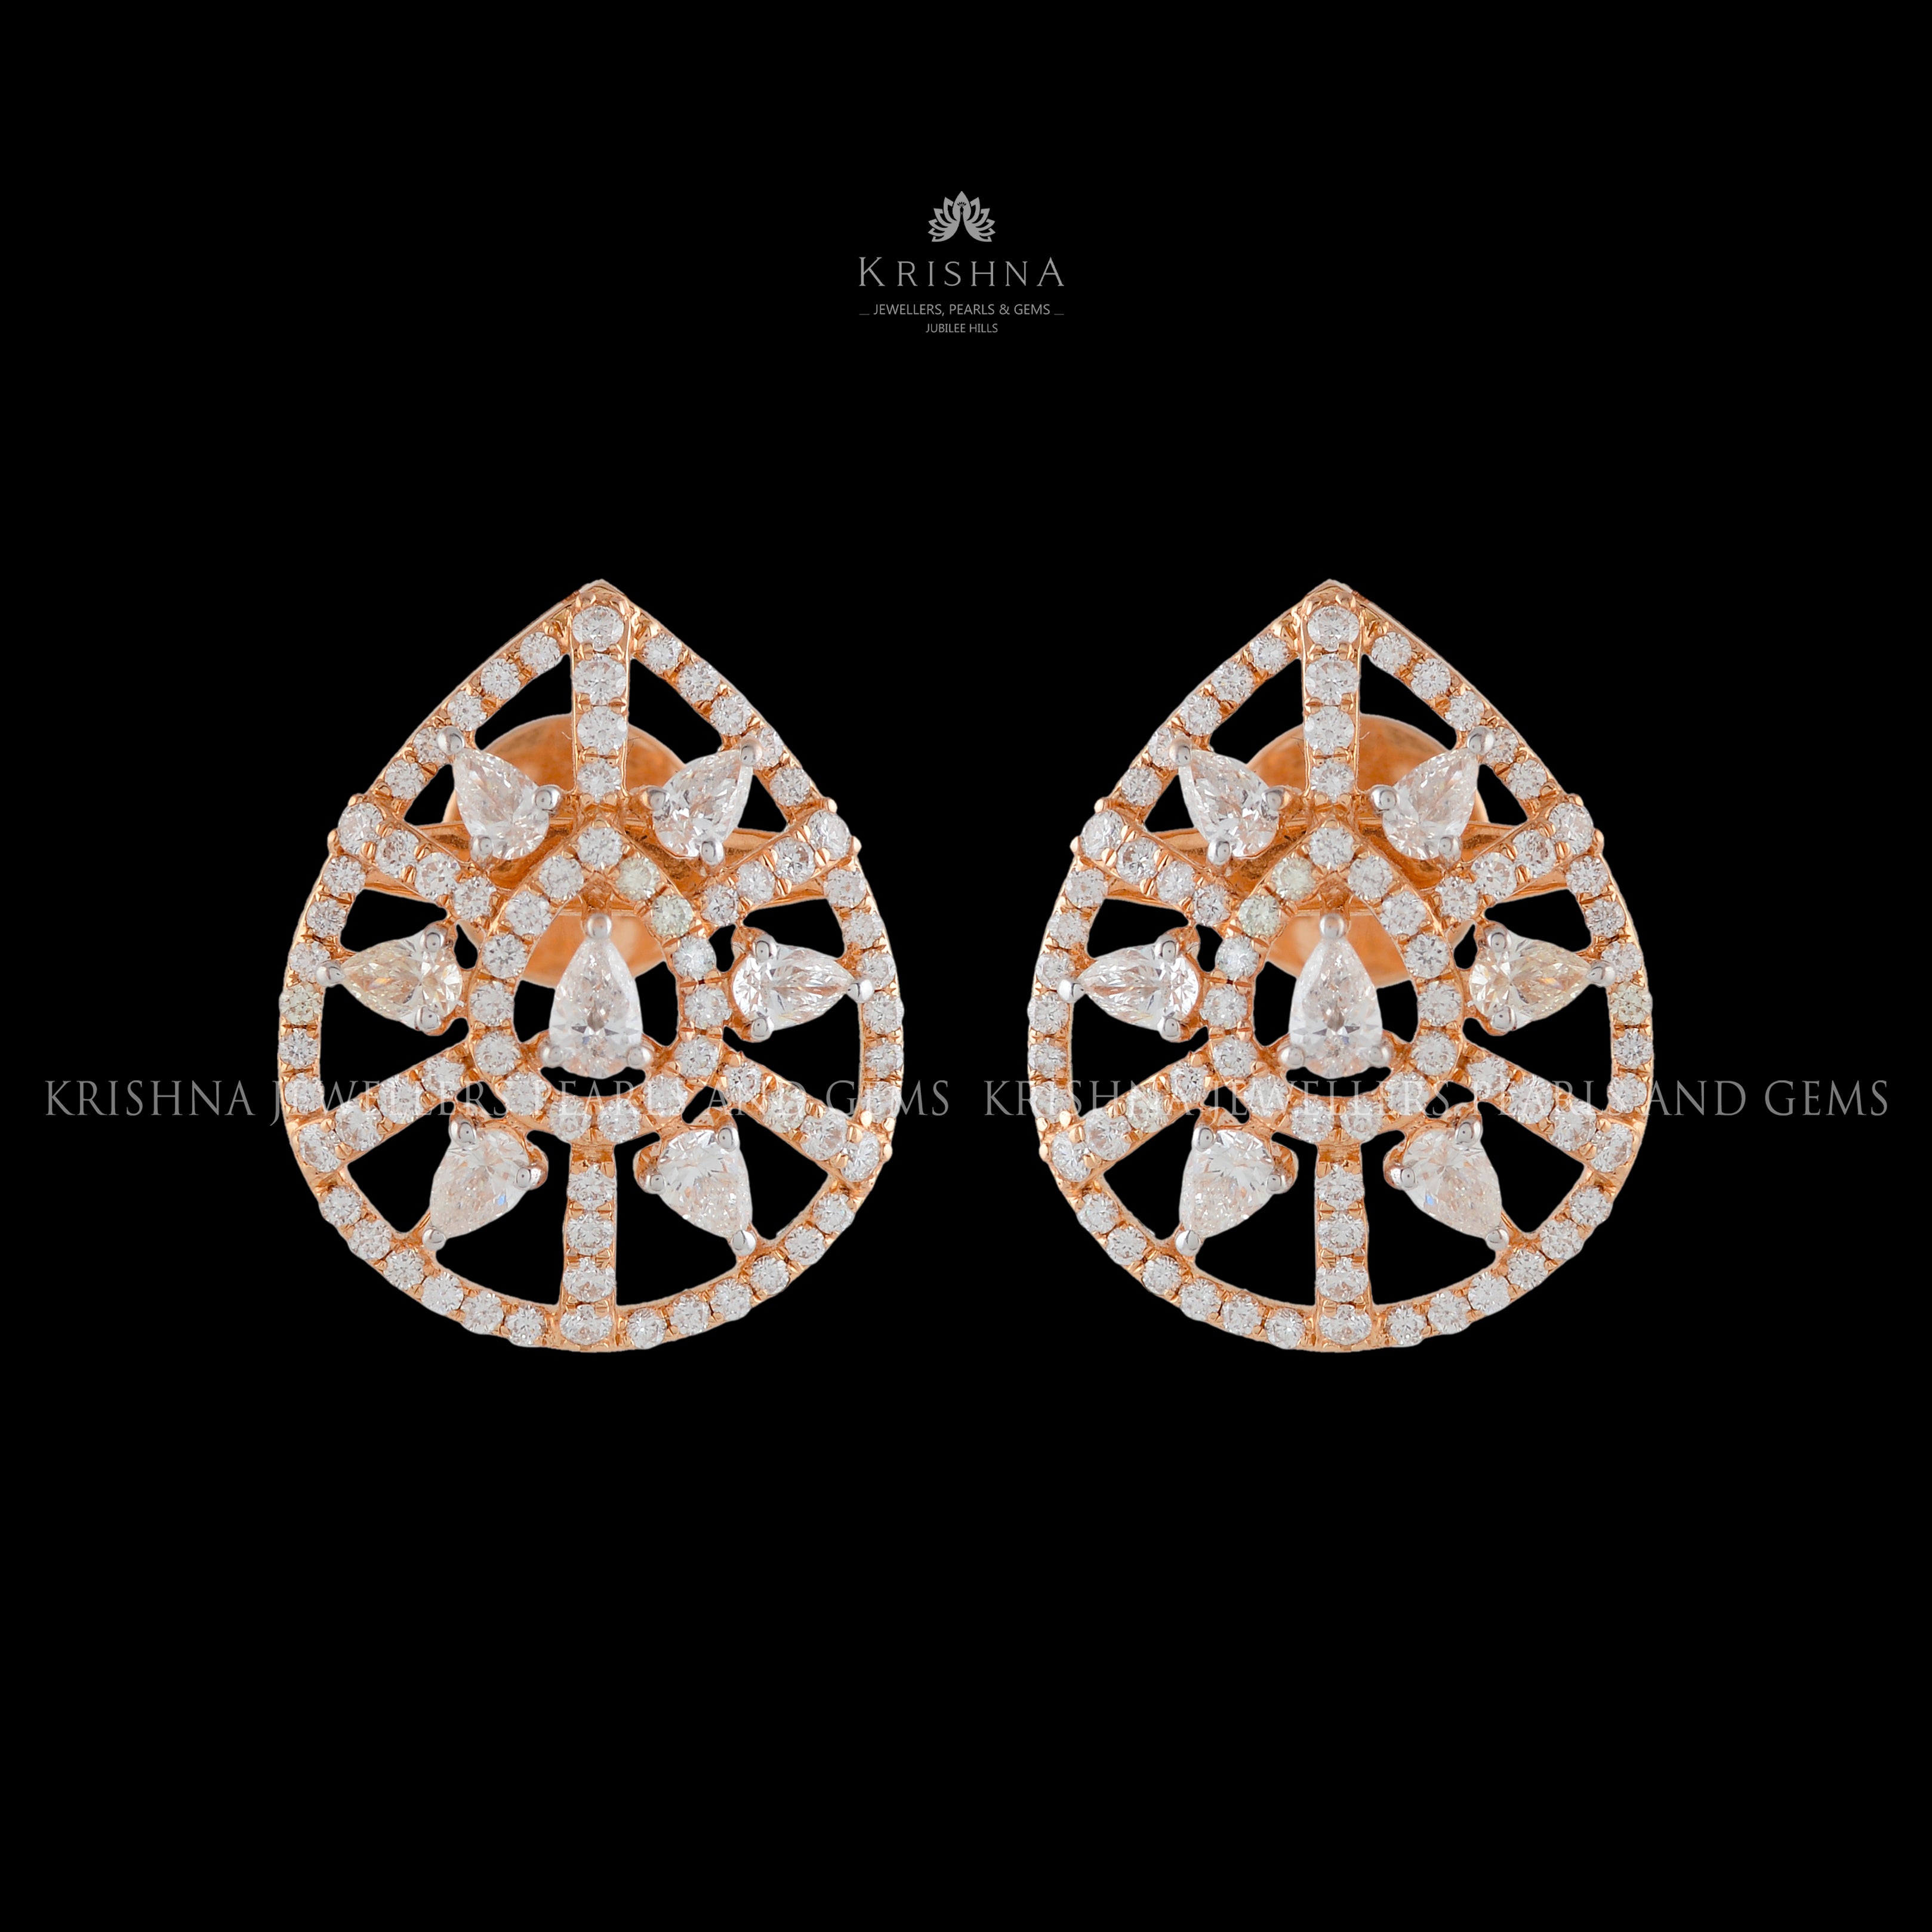 Modish Rosegold Diamond Earrings